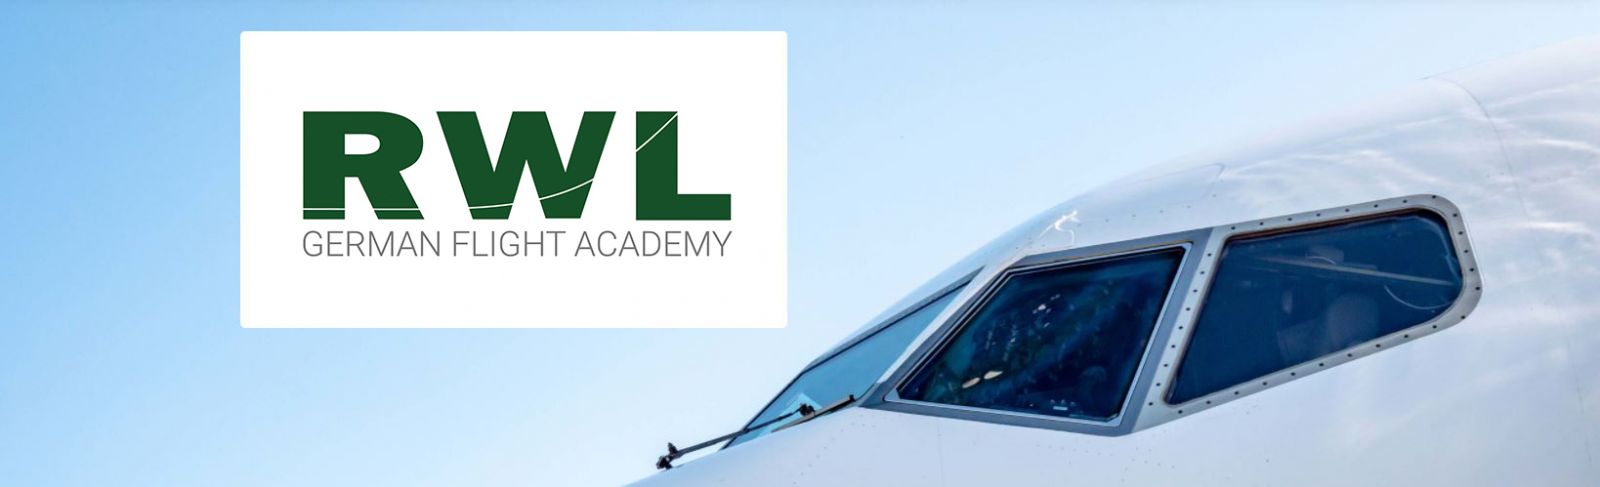 RWL German Flight Academy